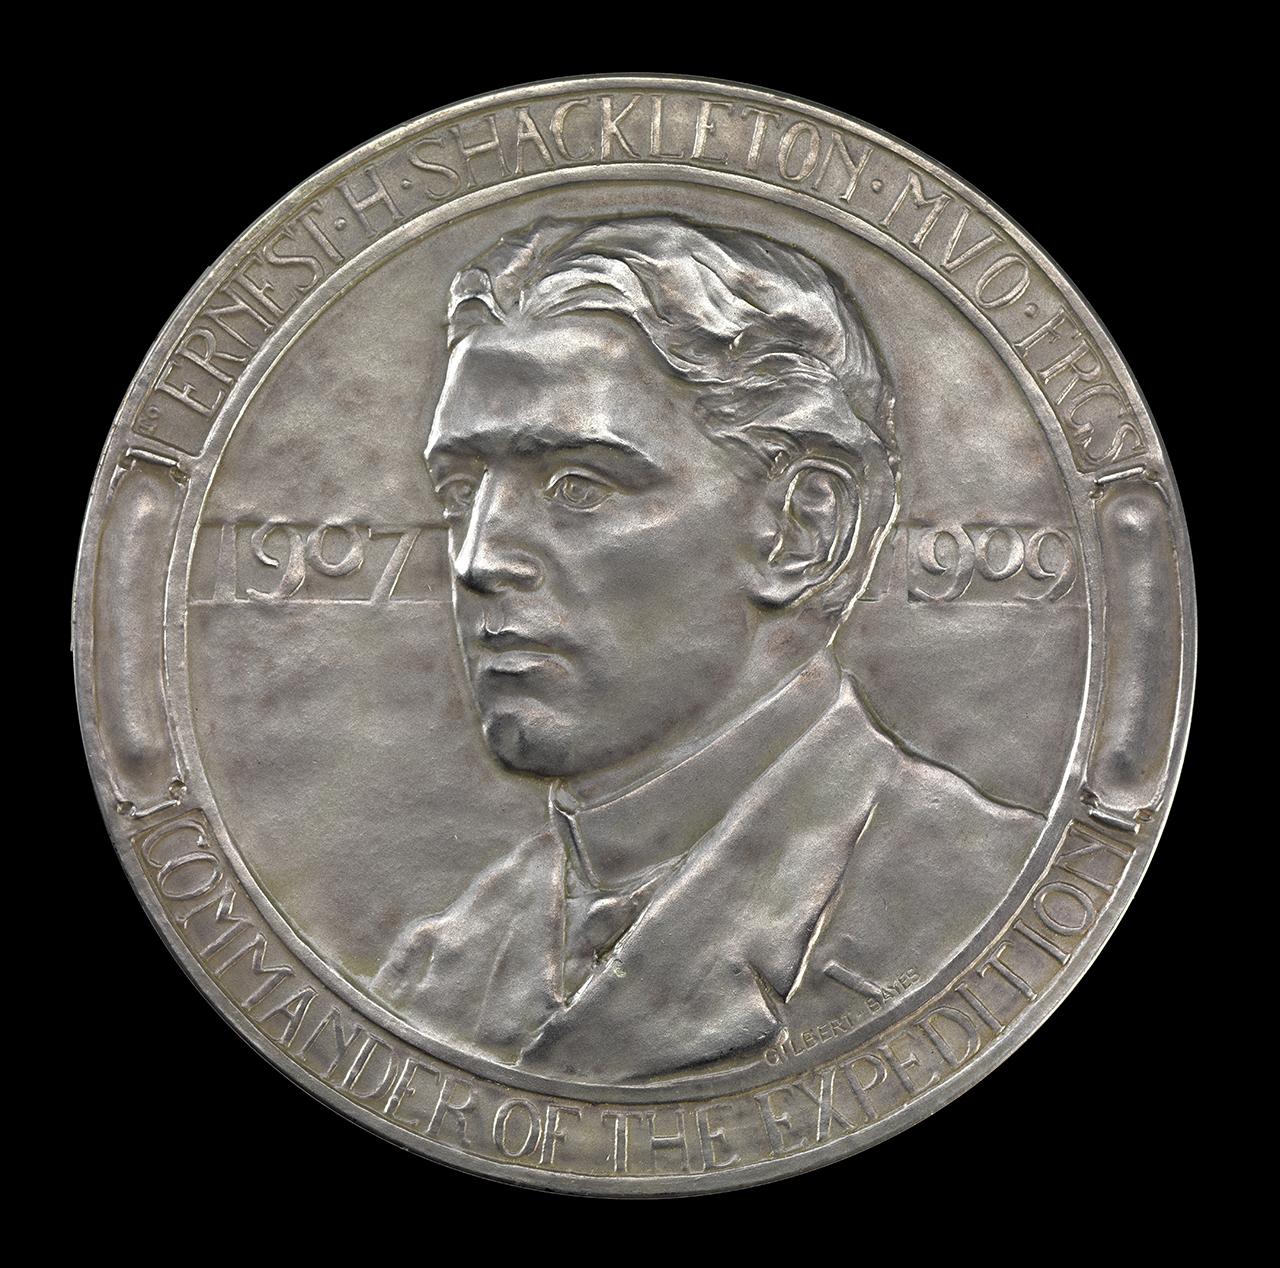 A commemorative silver medal showing Ernest Shackleton in profile